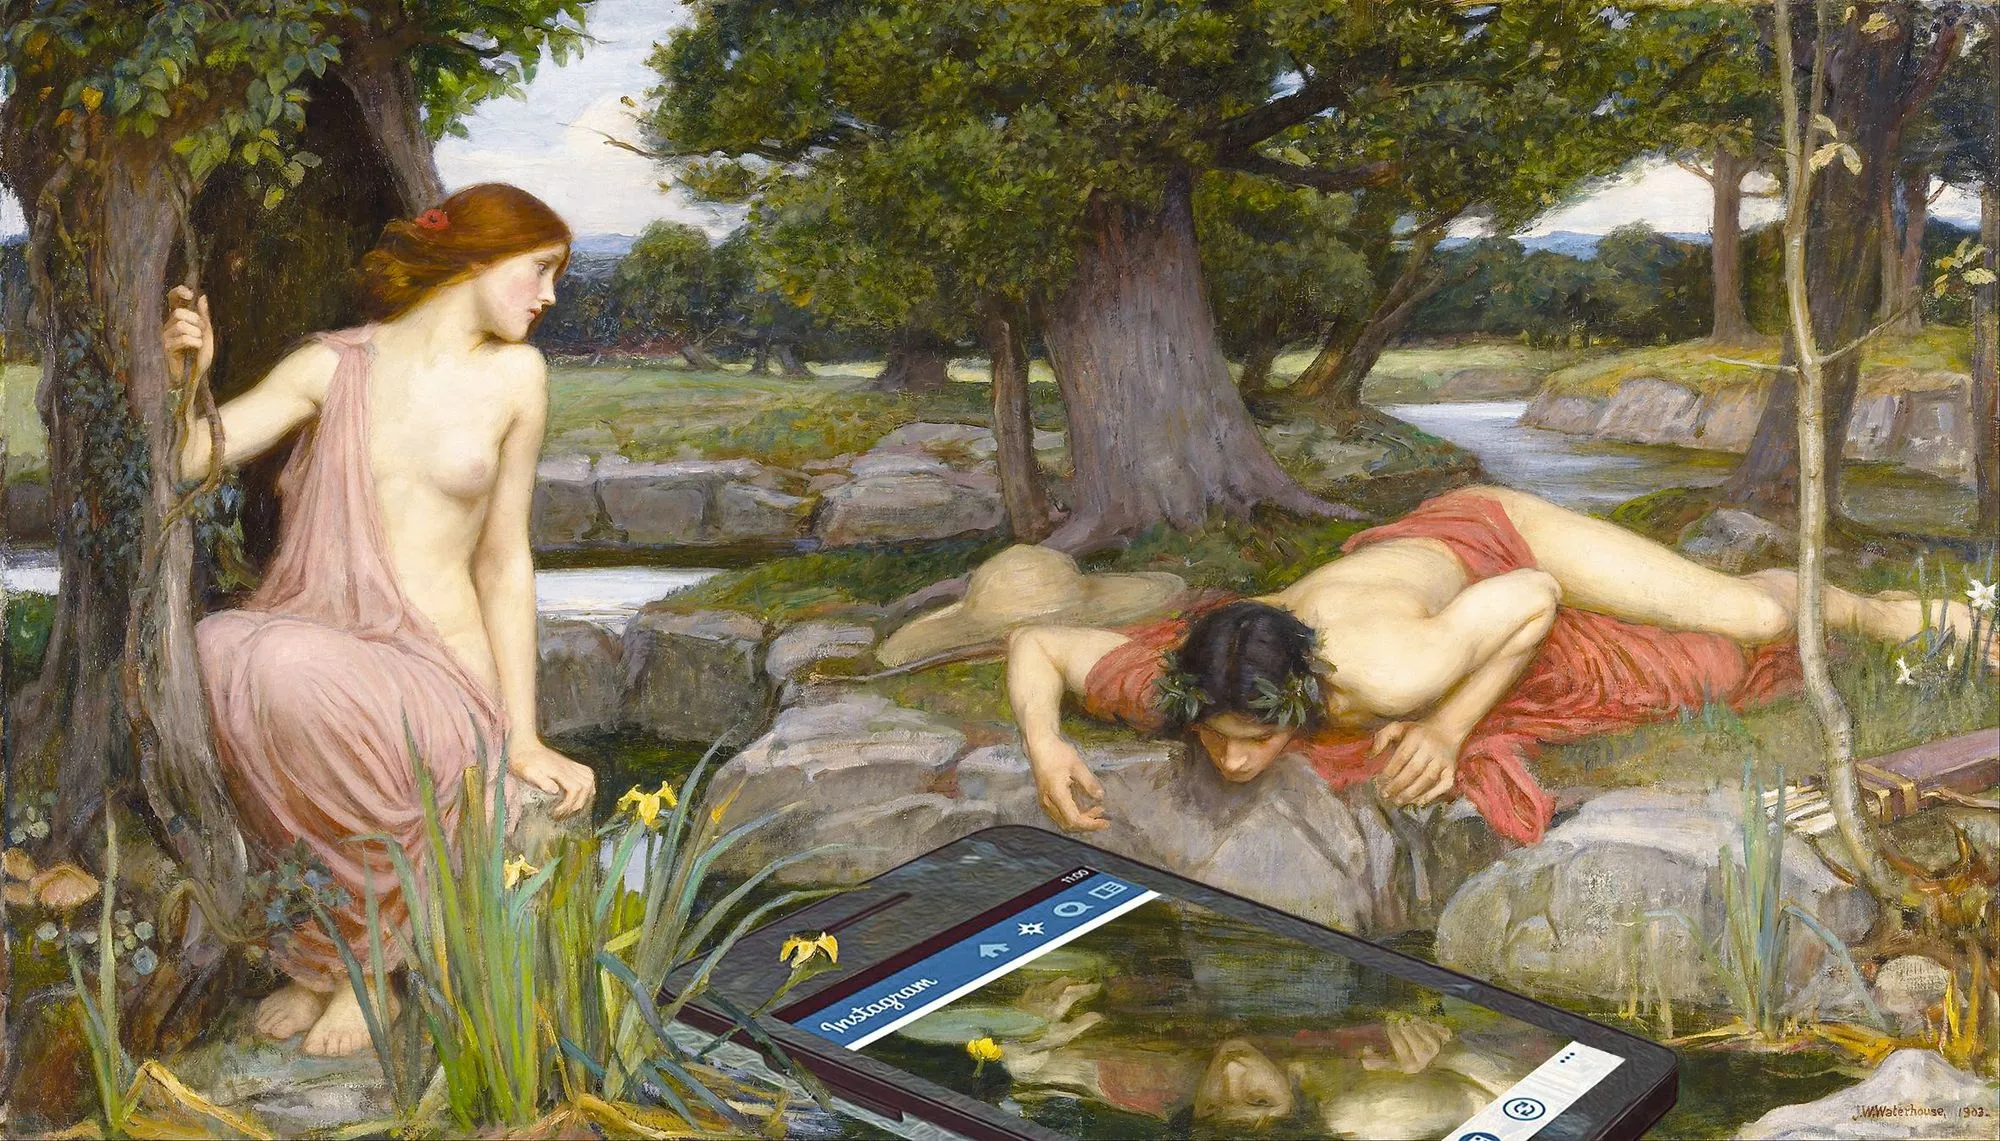 Echo and Narcissus, by John William Waterhouse, 1903, adapted by Dan Cretu, 2015.